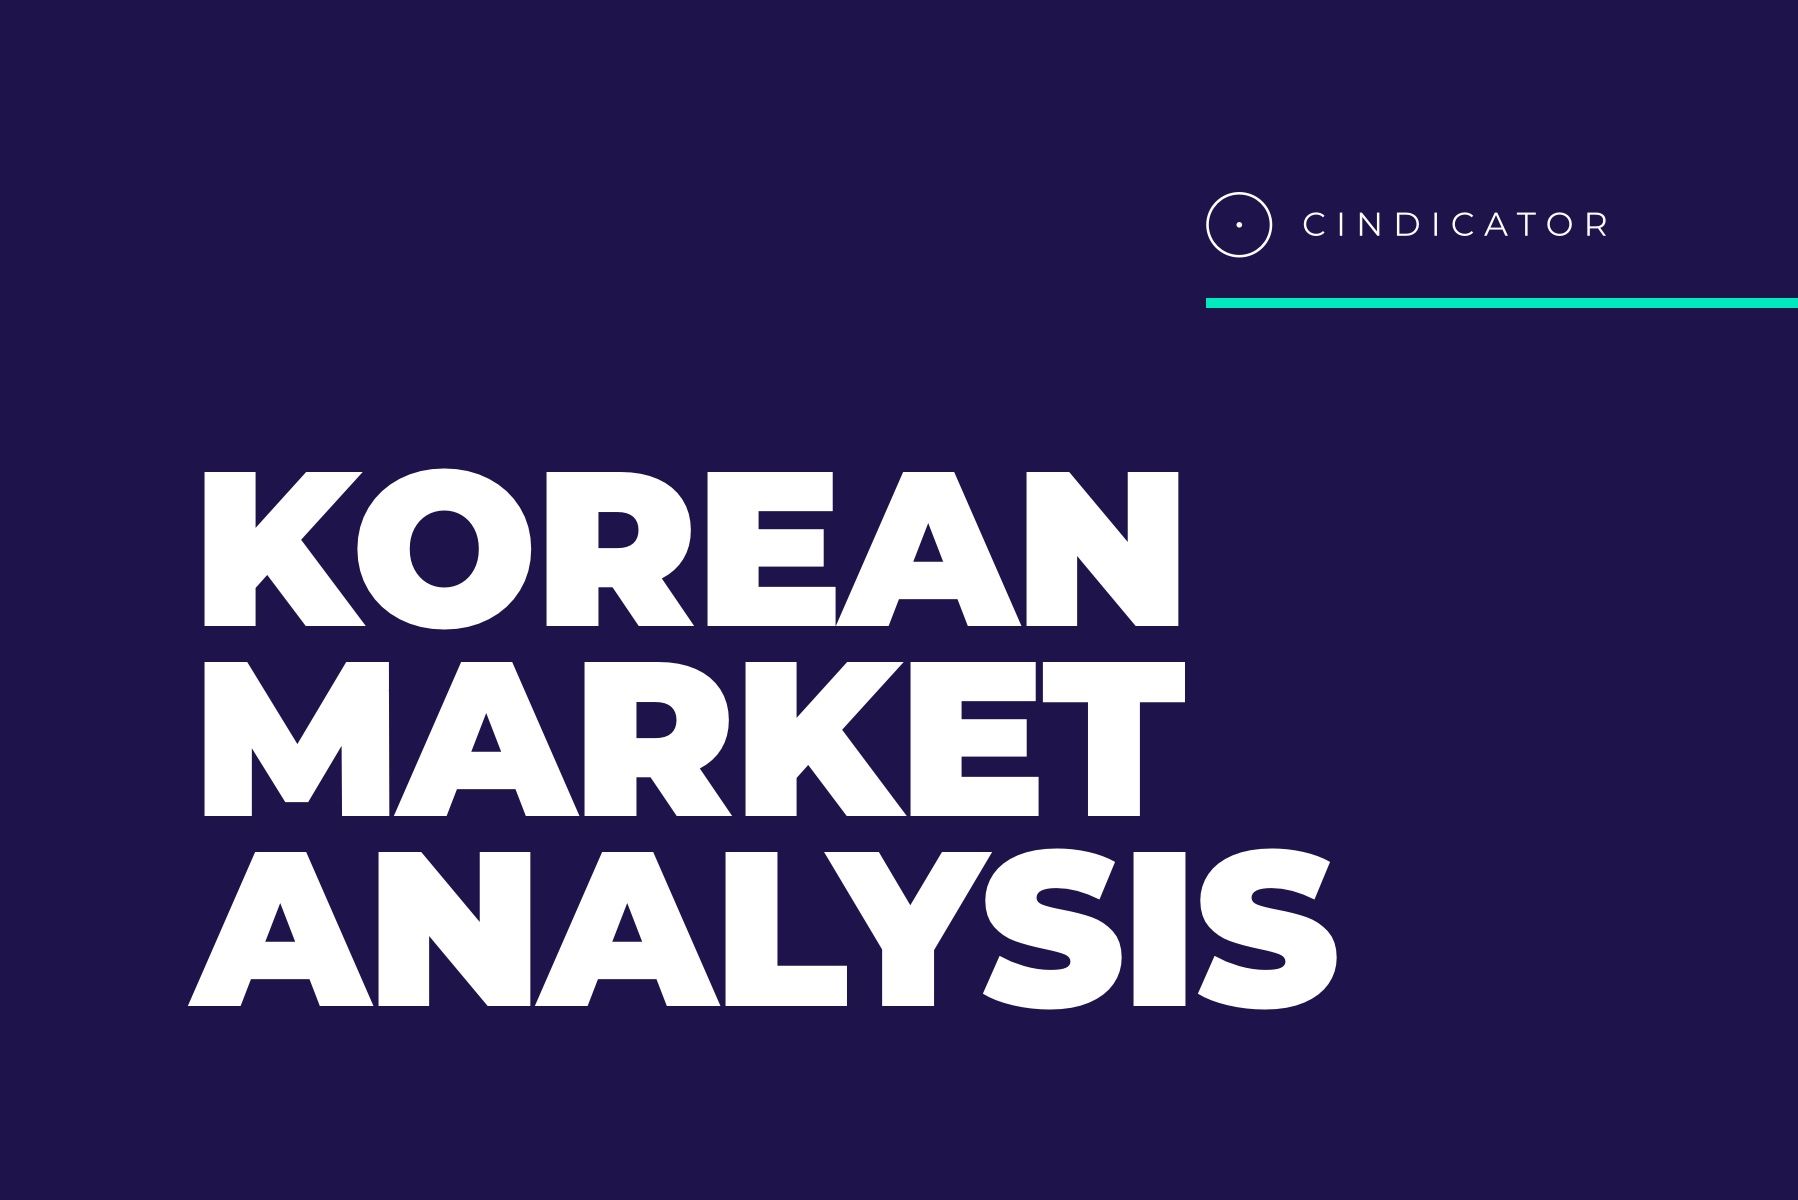 Report. Korean Market Analysis